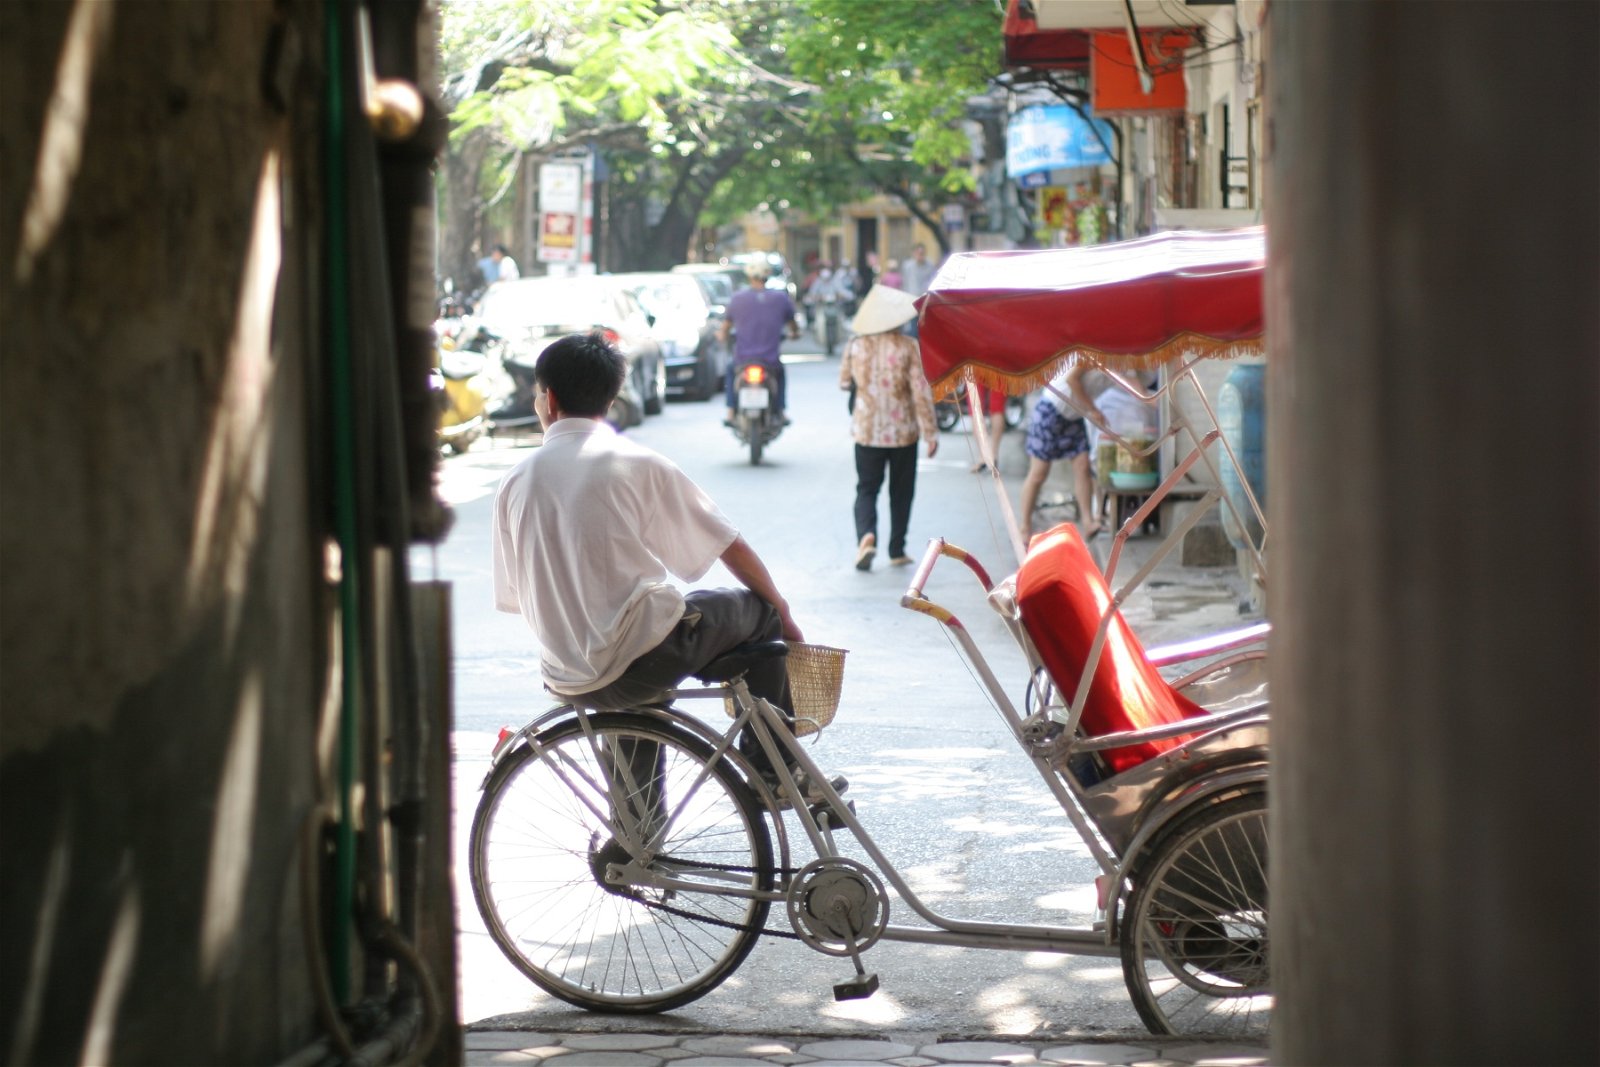 long ltiga nguyen vB11eFJ1AH8 unsplash 1 - Hanoi Transportation | Getting Around Vietnam's Capital